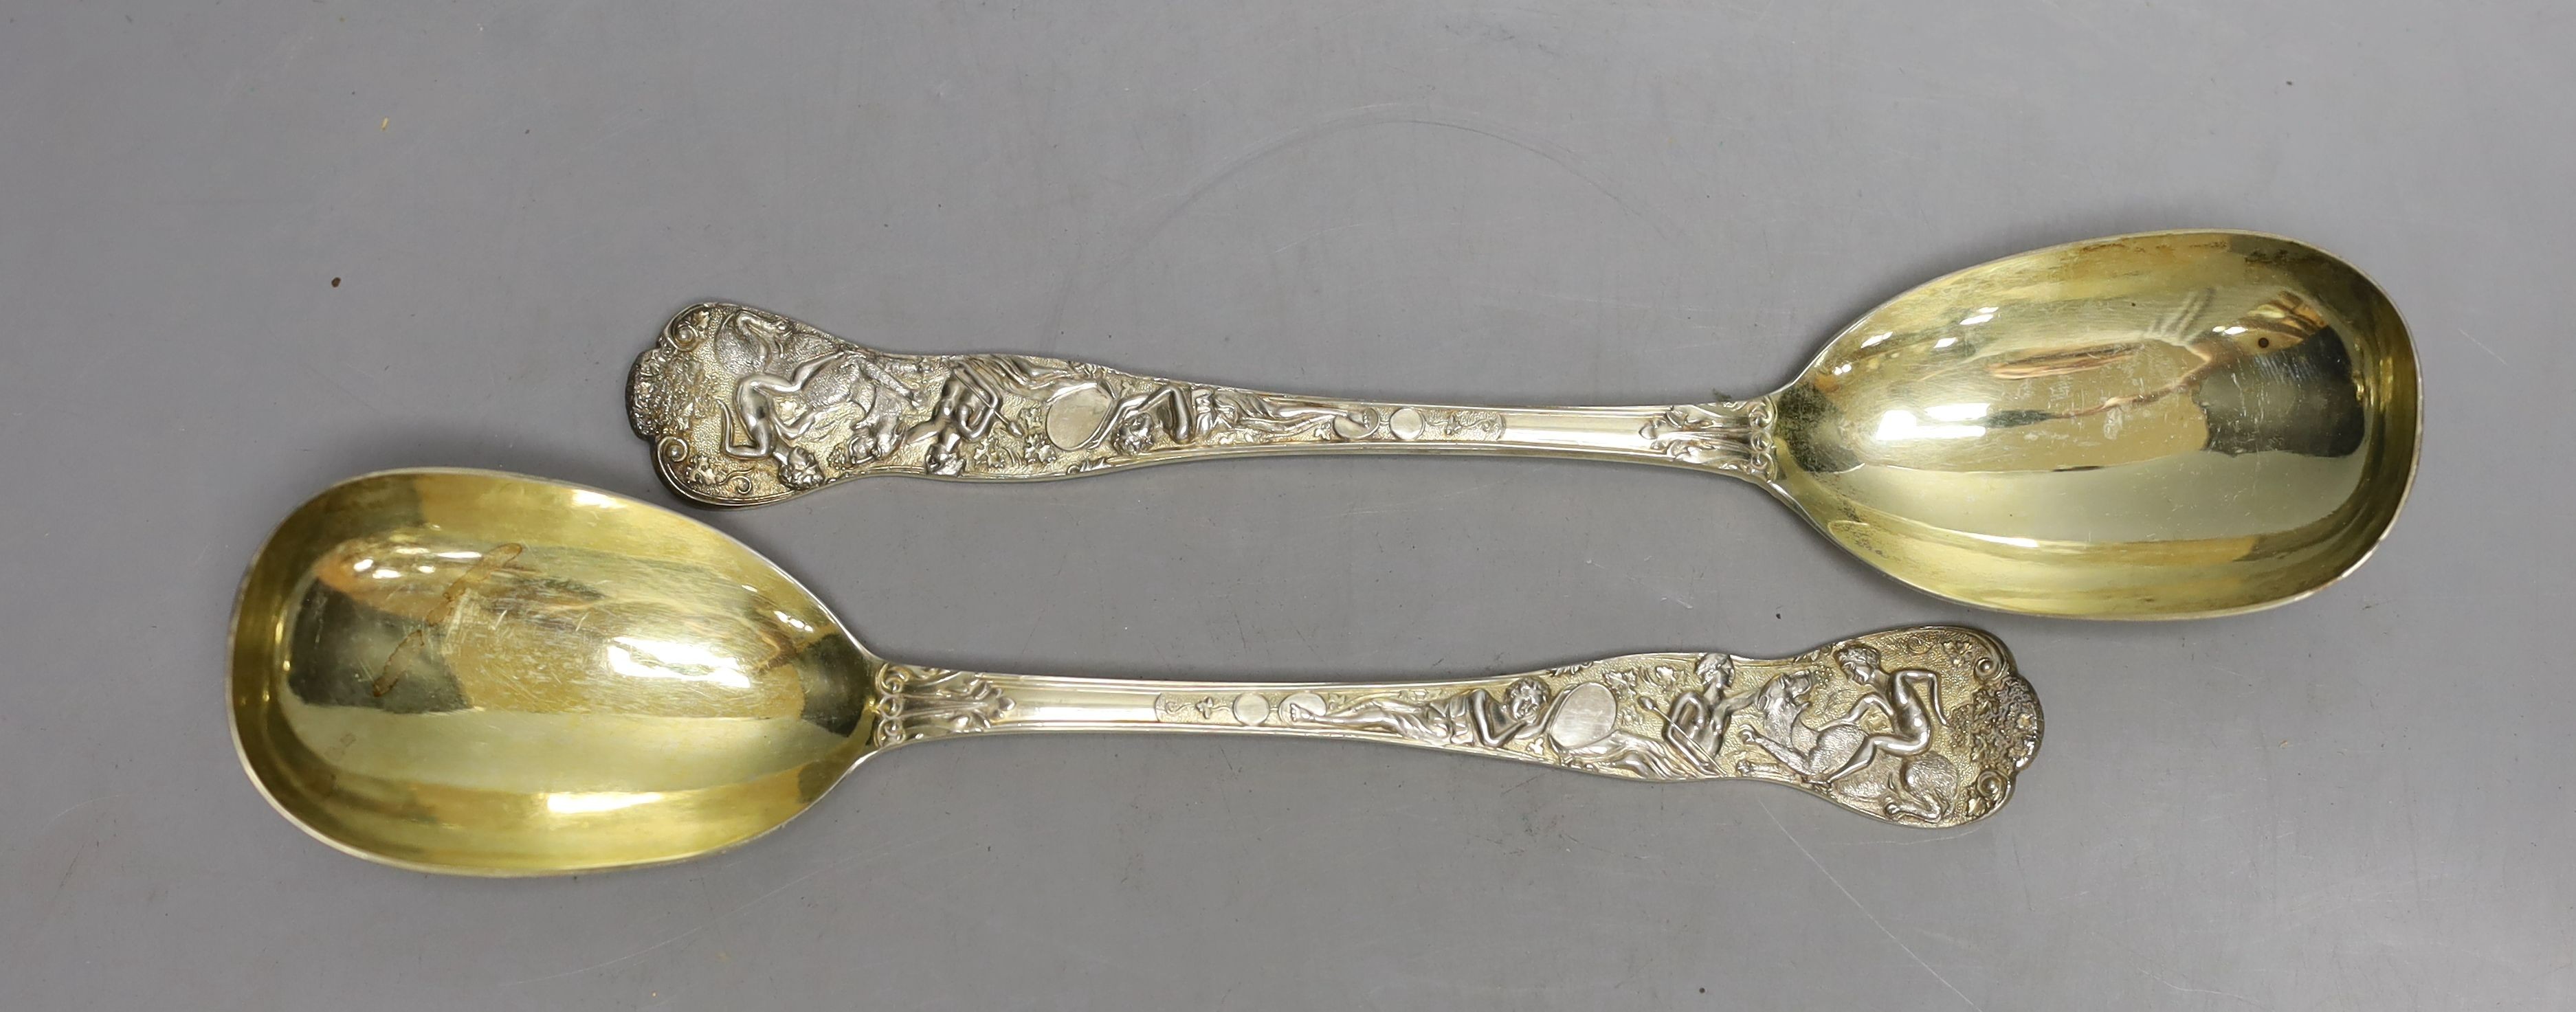 An ornate pair of Victorian silver gilt serving spoons, Lias & Lias, London,1874, 20.6cm, 6.4oz.